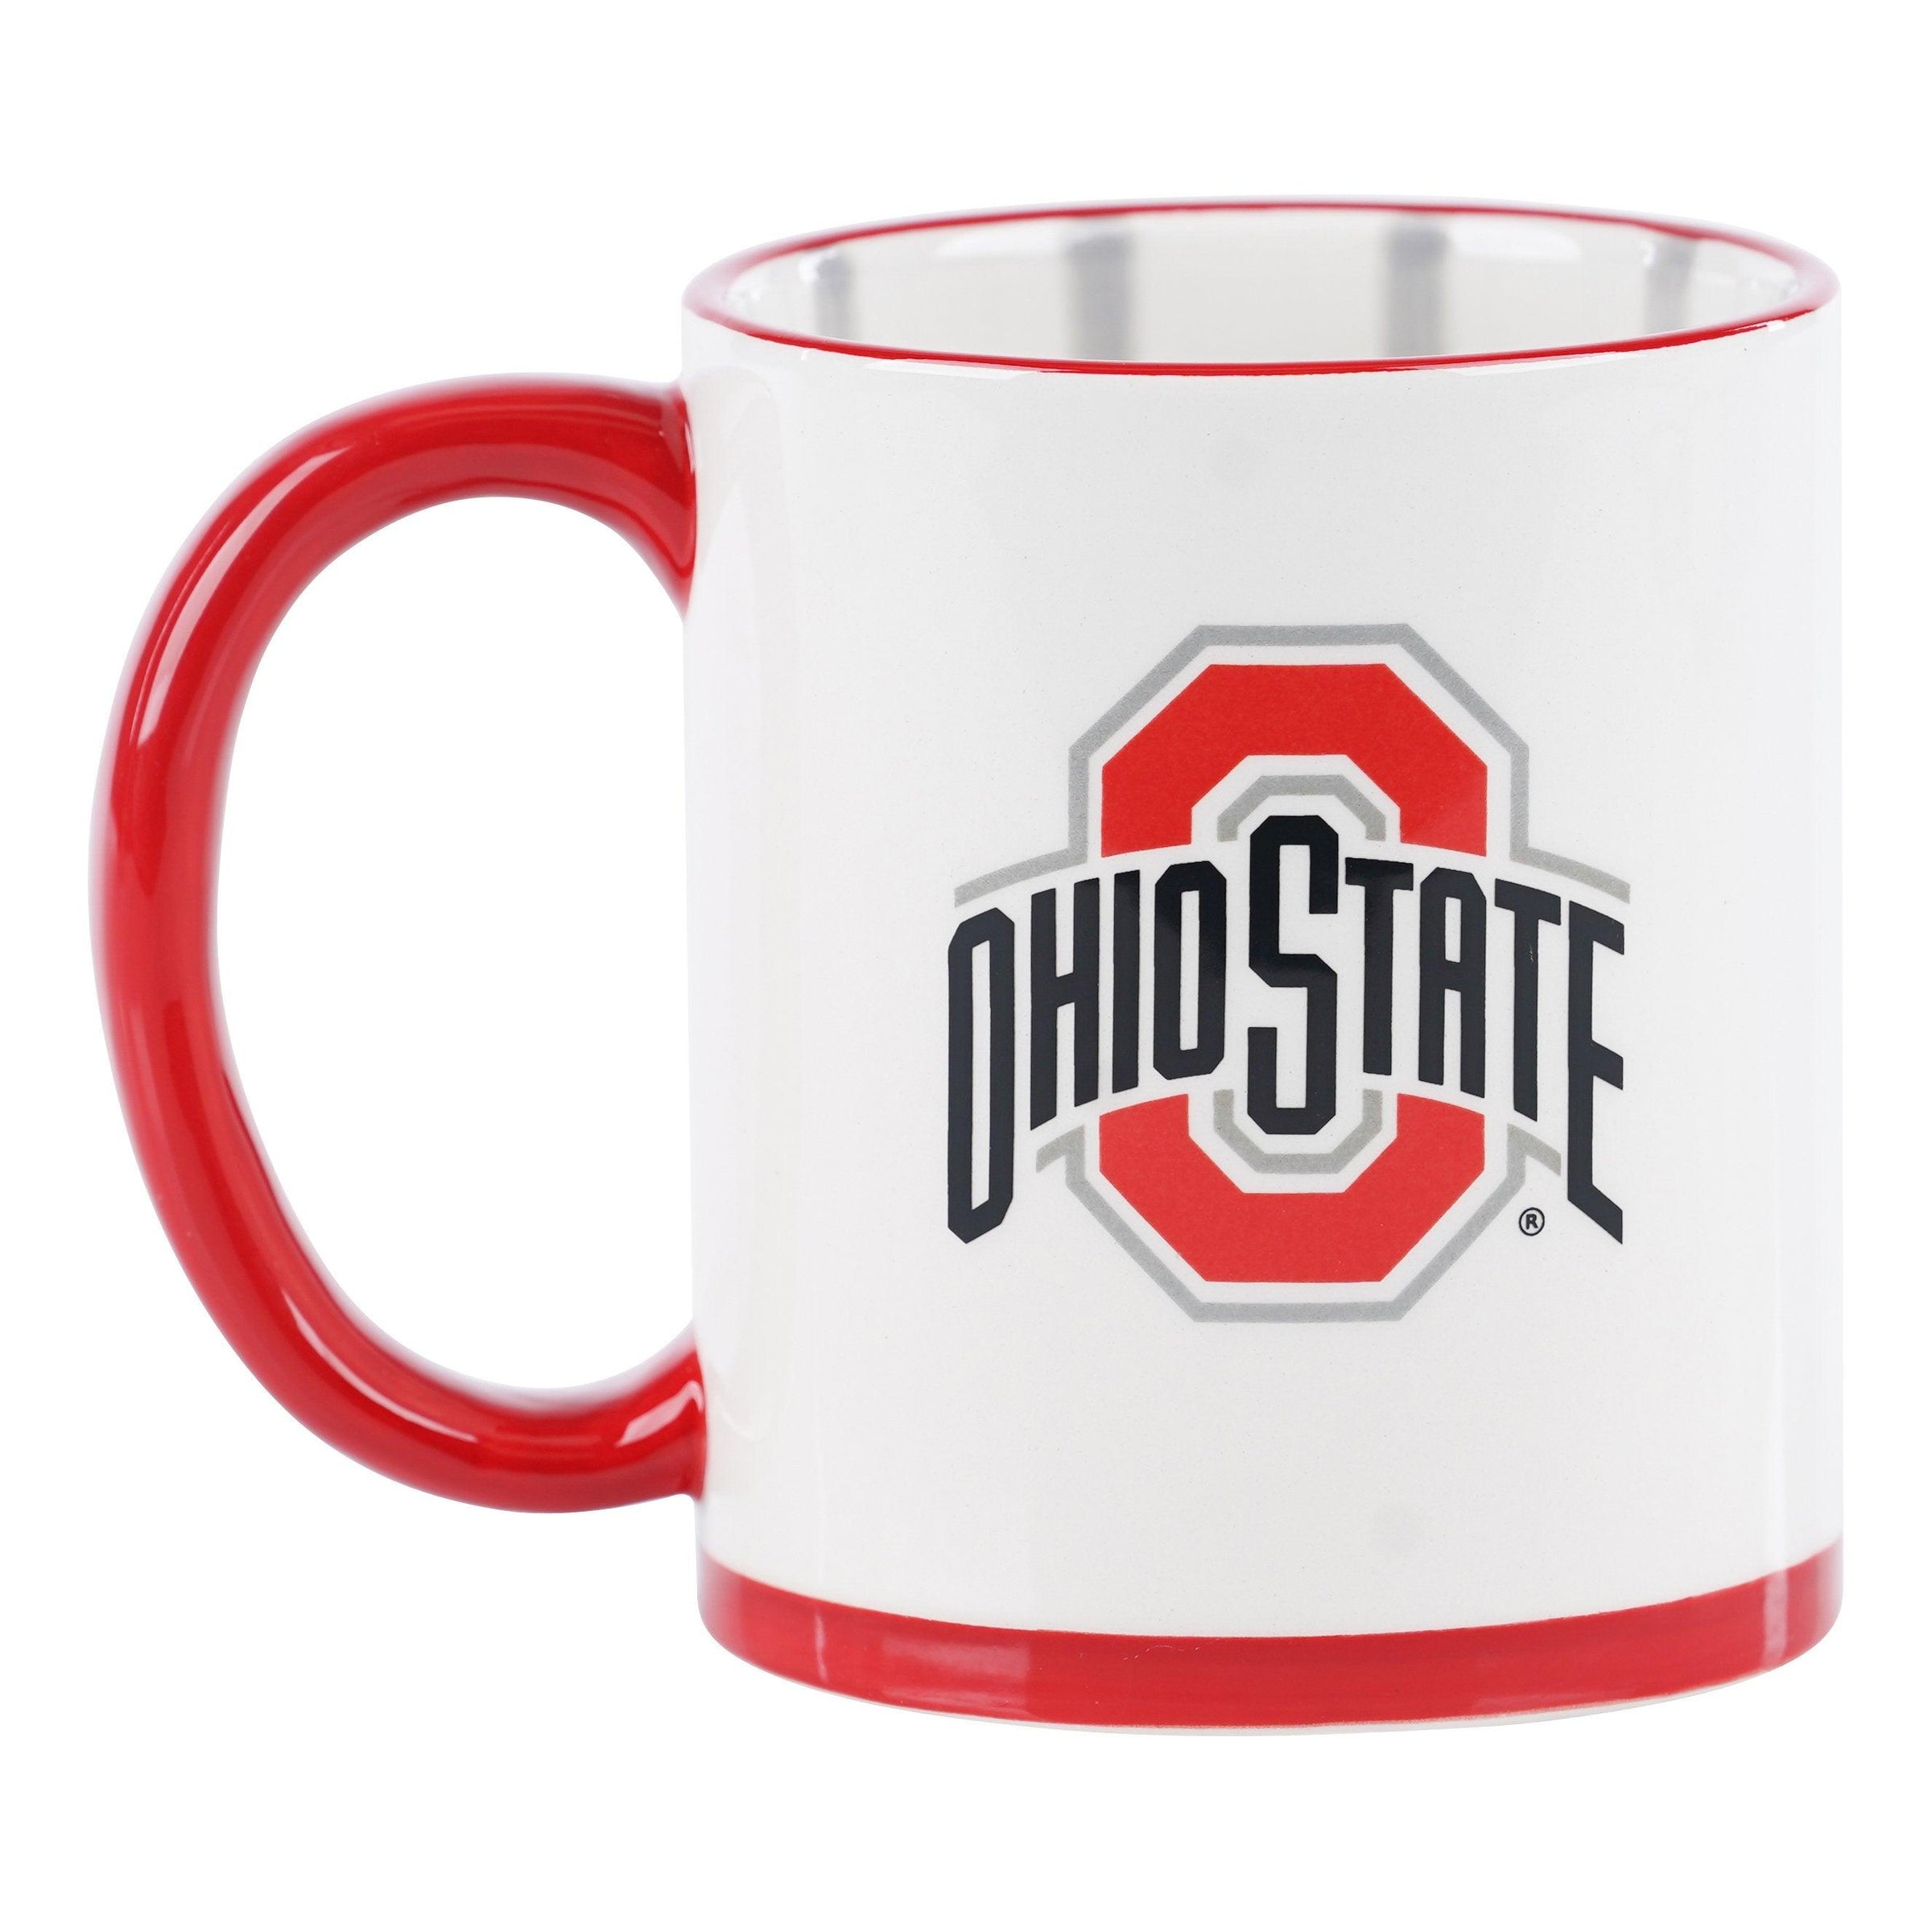 Ohio State of Mind Travel Mug by Glitteracy